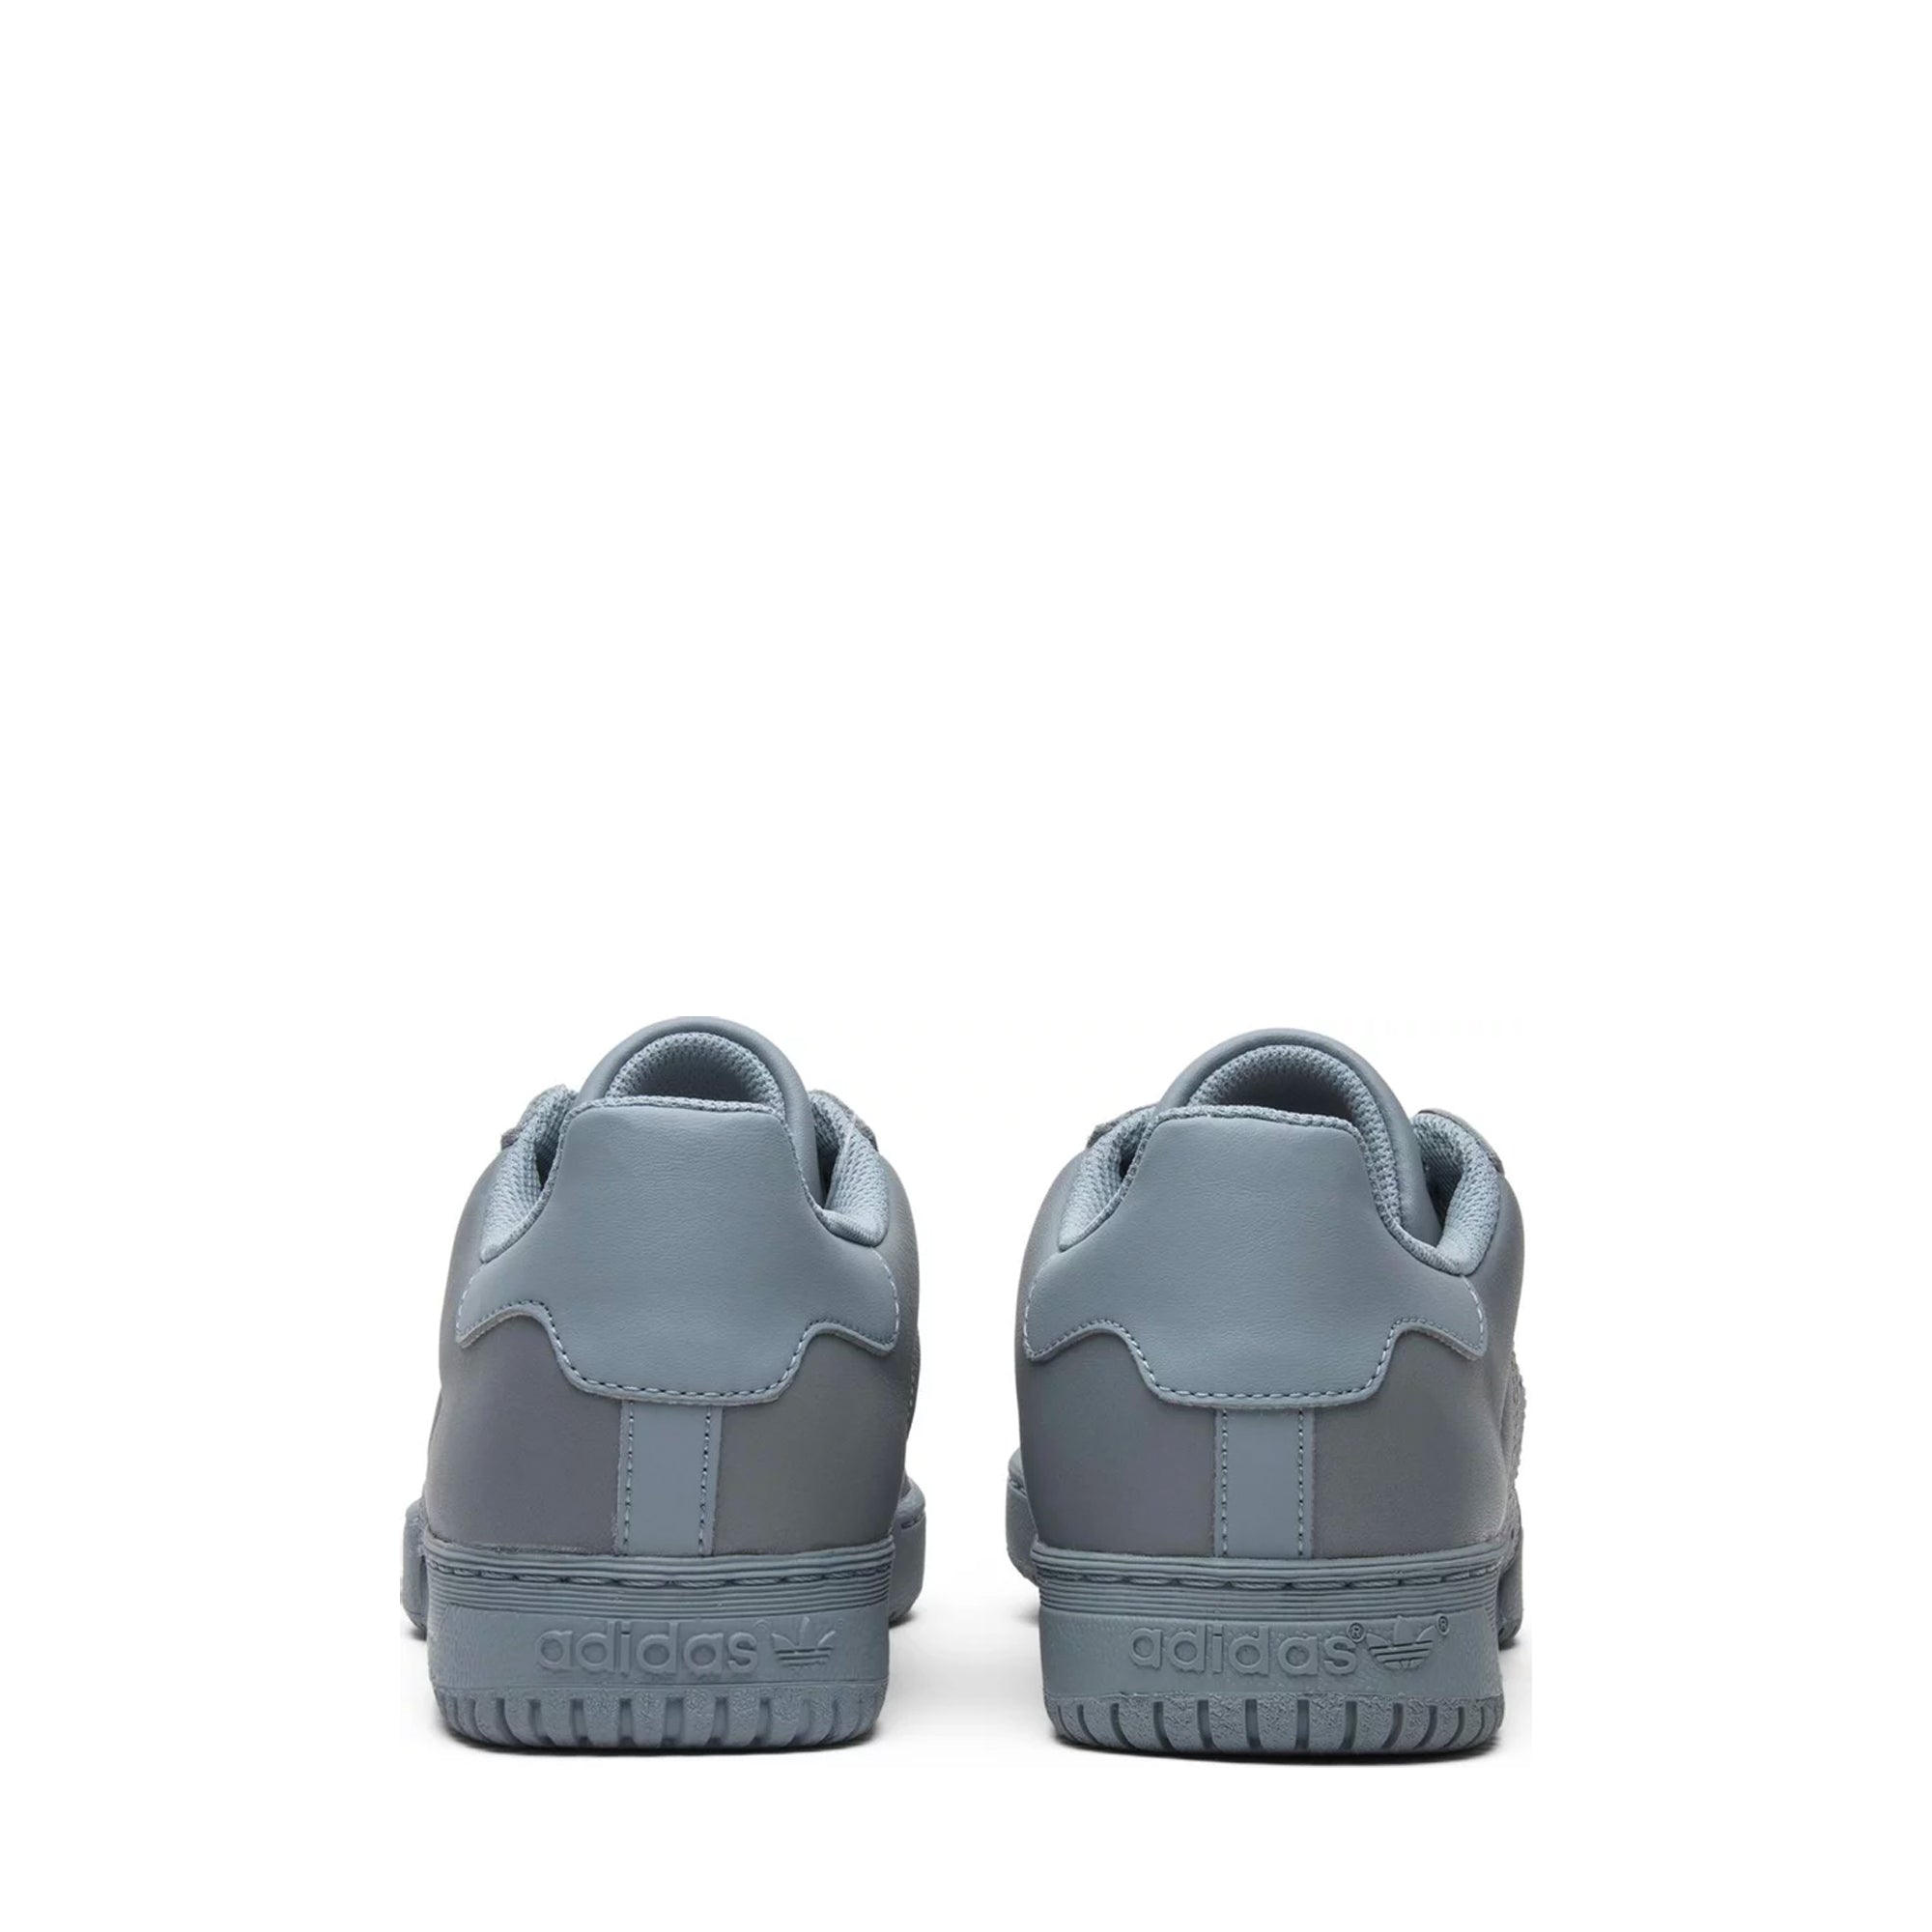 adidas Yeezy Powerphase Calabasas Grey-PLUS